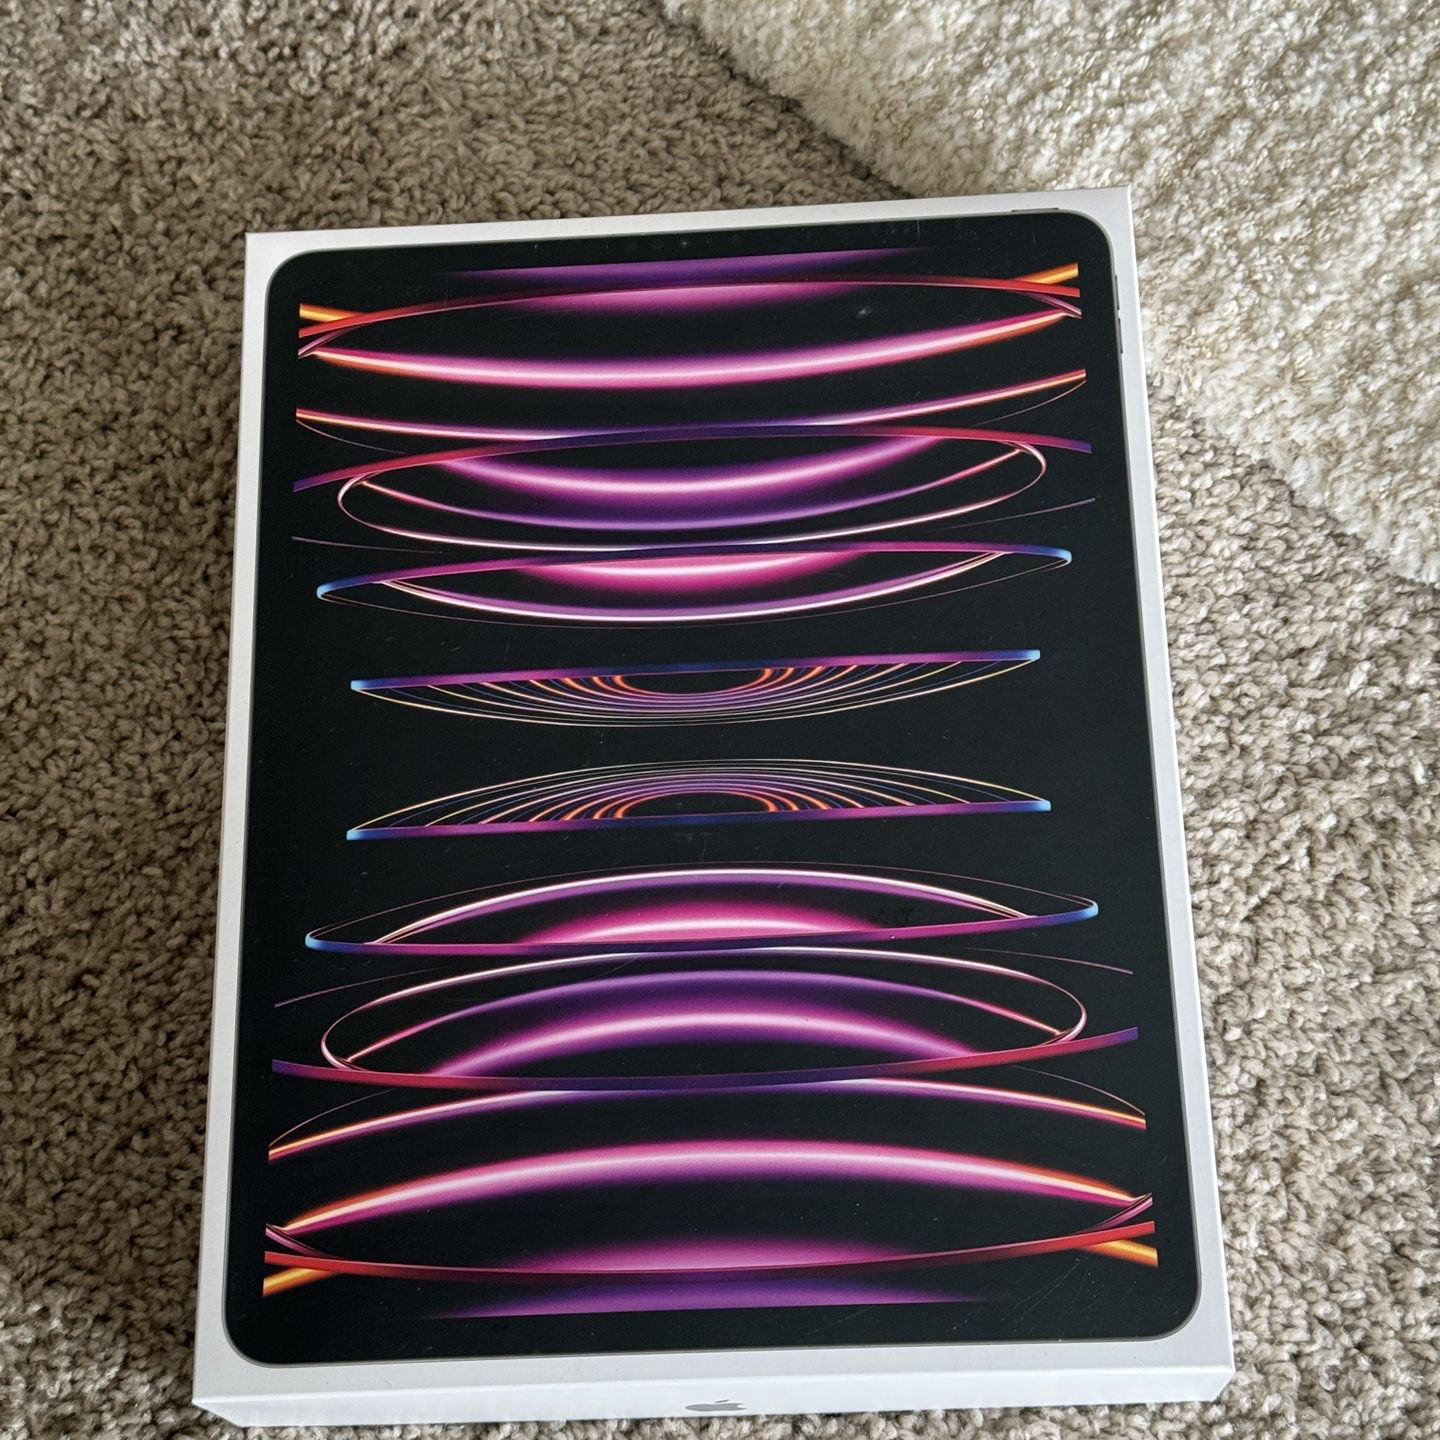 iPad Pro 12.9” (6th Generation) WiFi